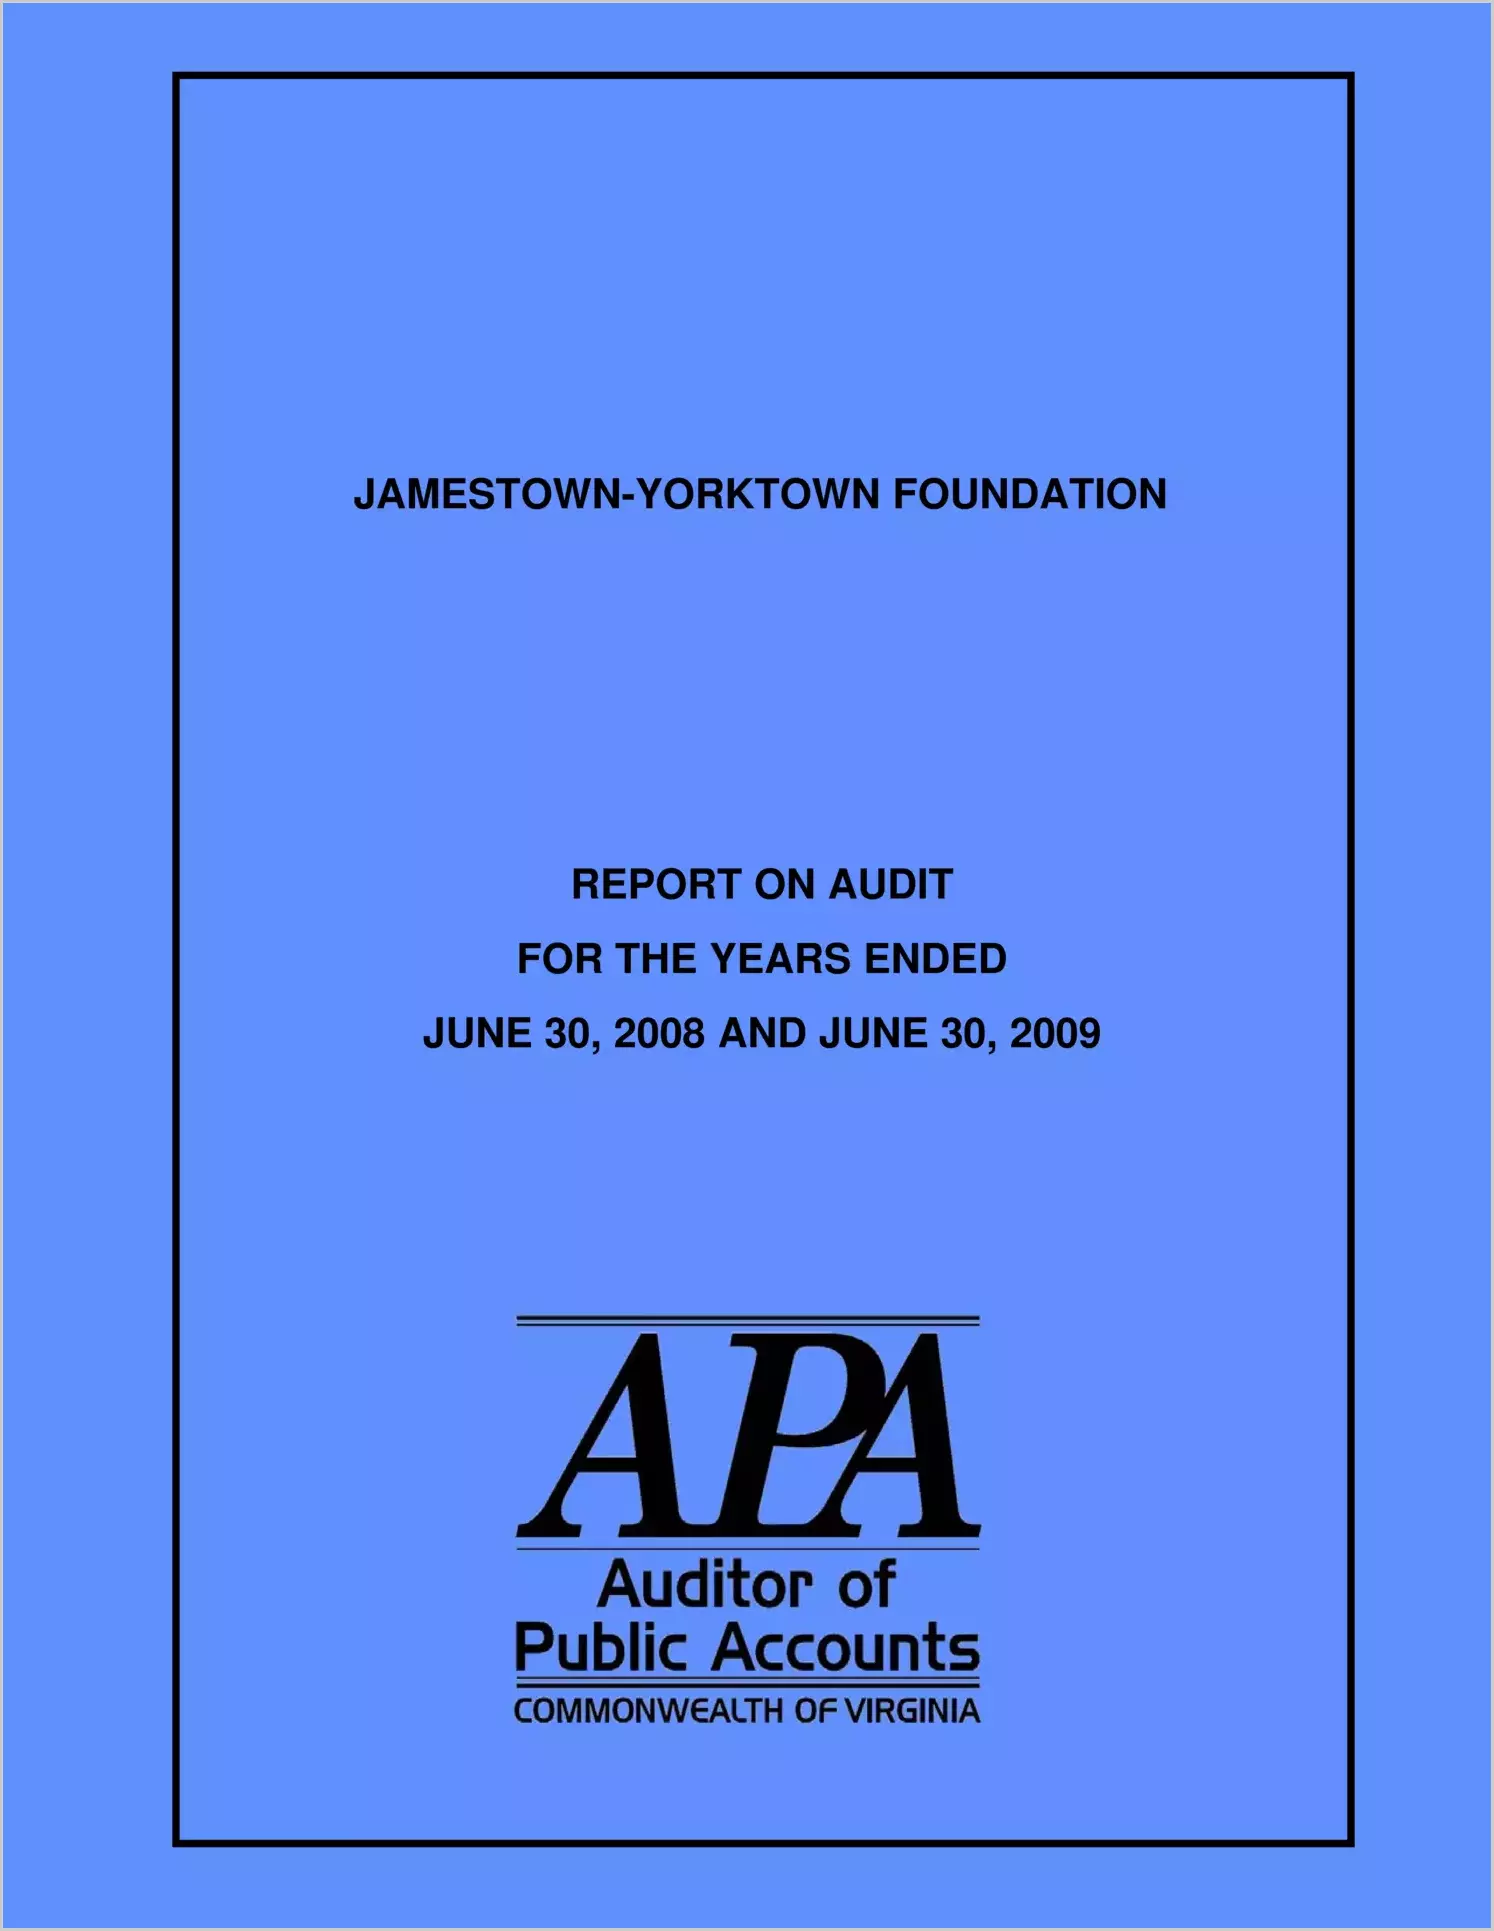 Jamestown-Yorktown Foundation for years ending June 30, 2008 and June 30, 2009